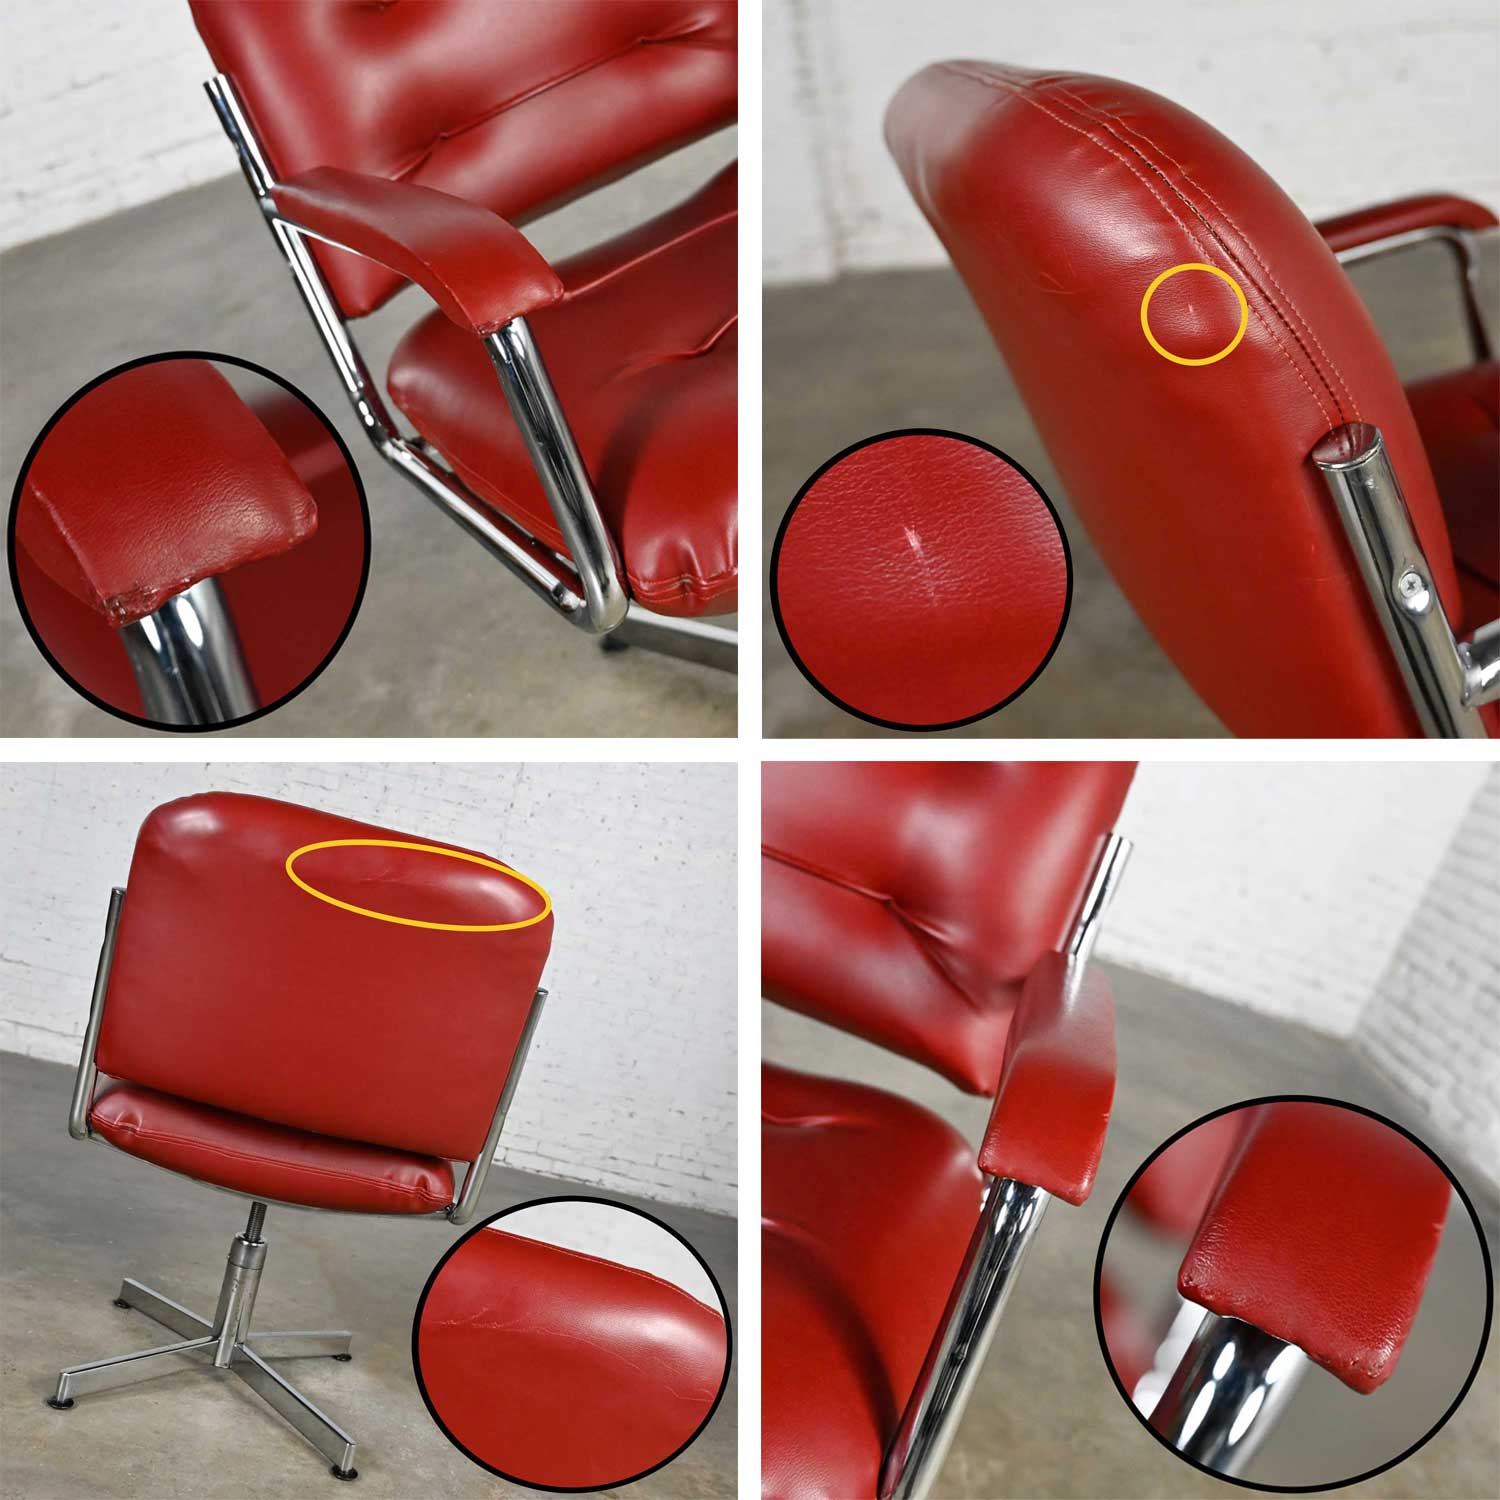 Vintage Mid-Century Modern Cordovan Faux Leather & Chrome 4 Prong Base Swivel Desk Chair